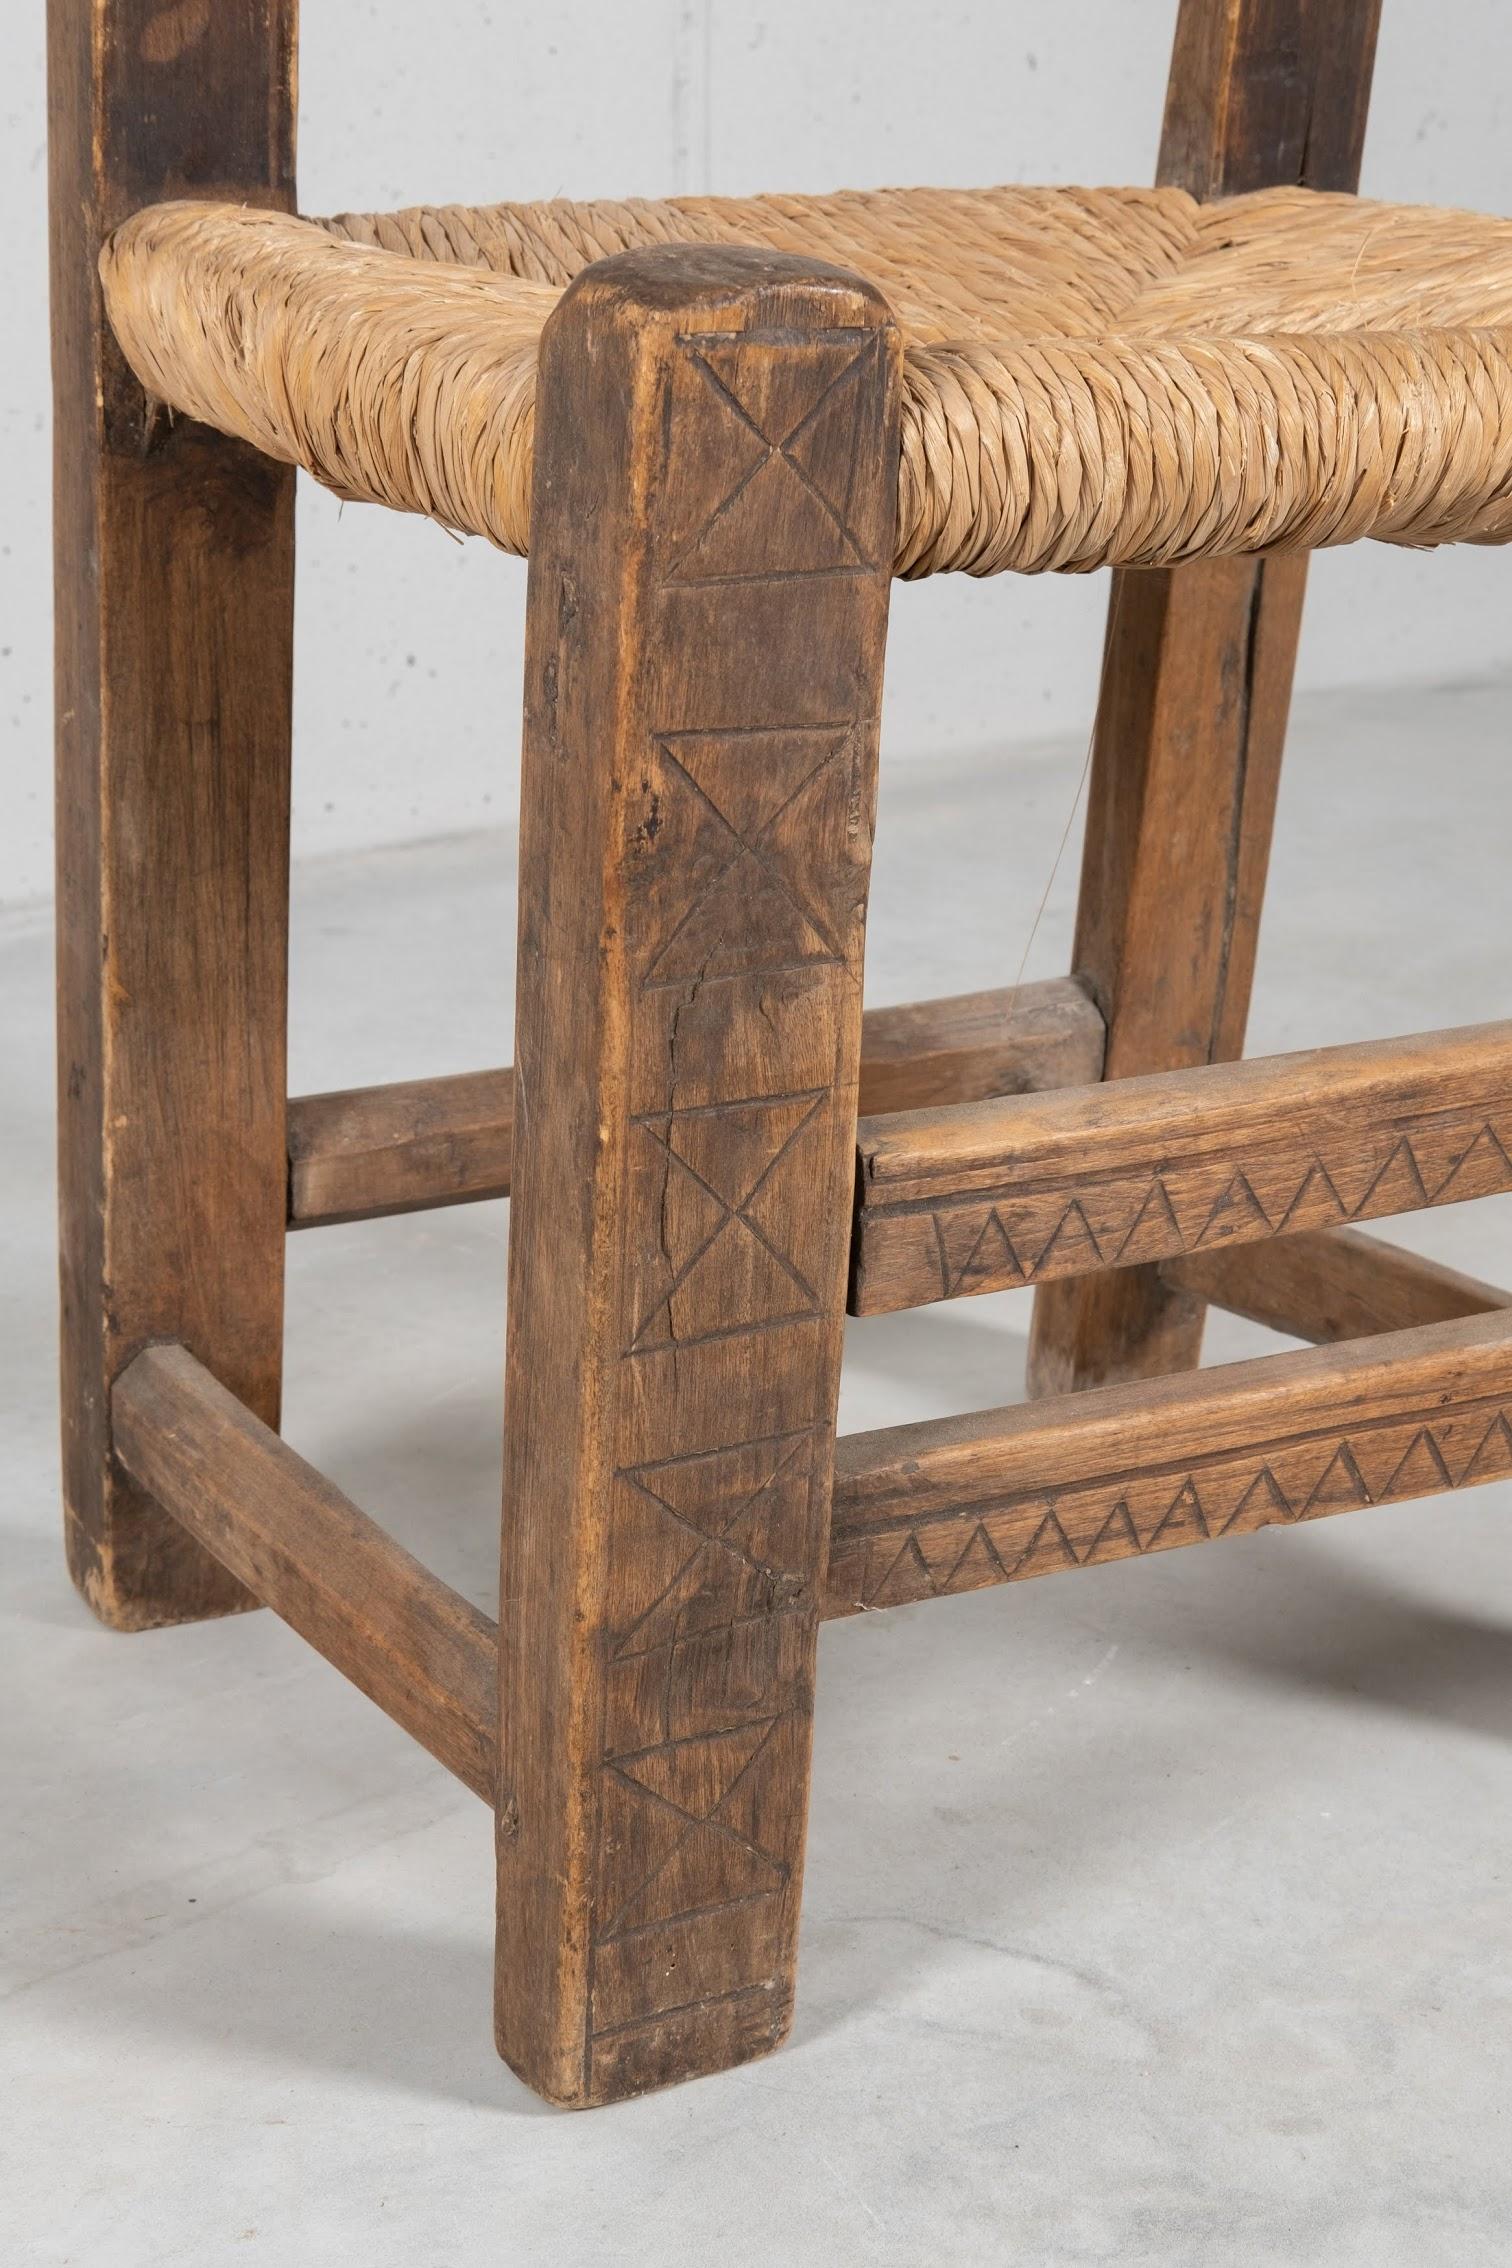 Swiss Poplar Straw-Bottom Chair, East Europe, Early 1800 For Sale